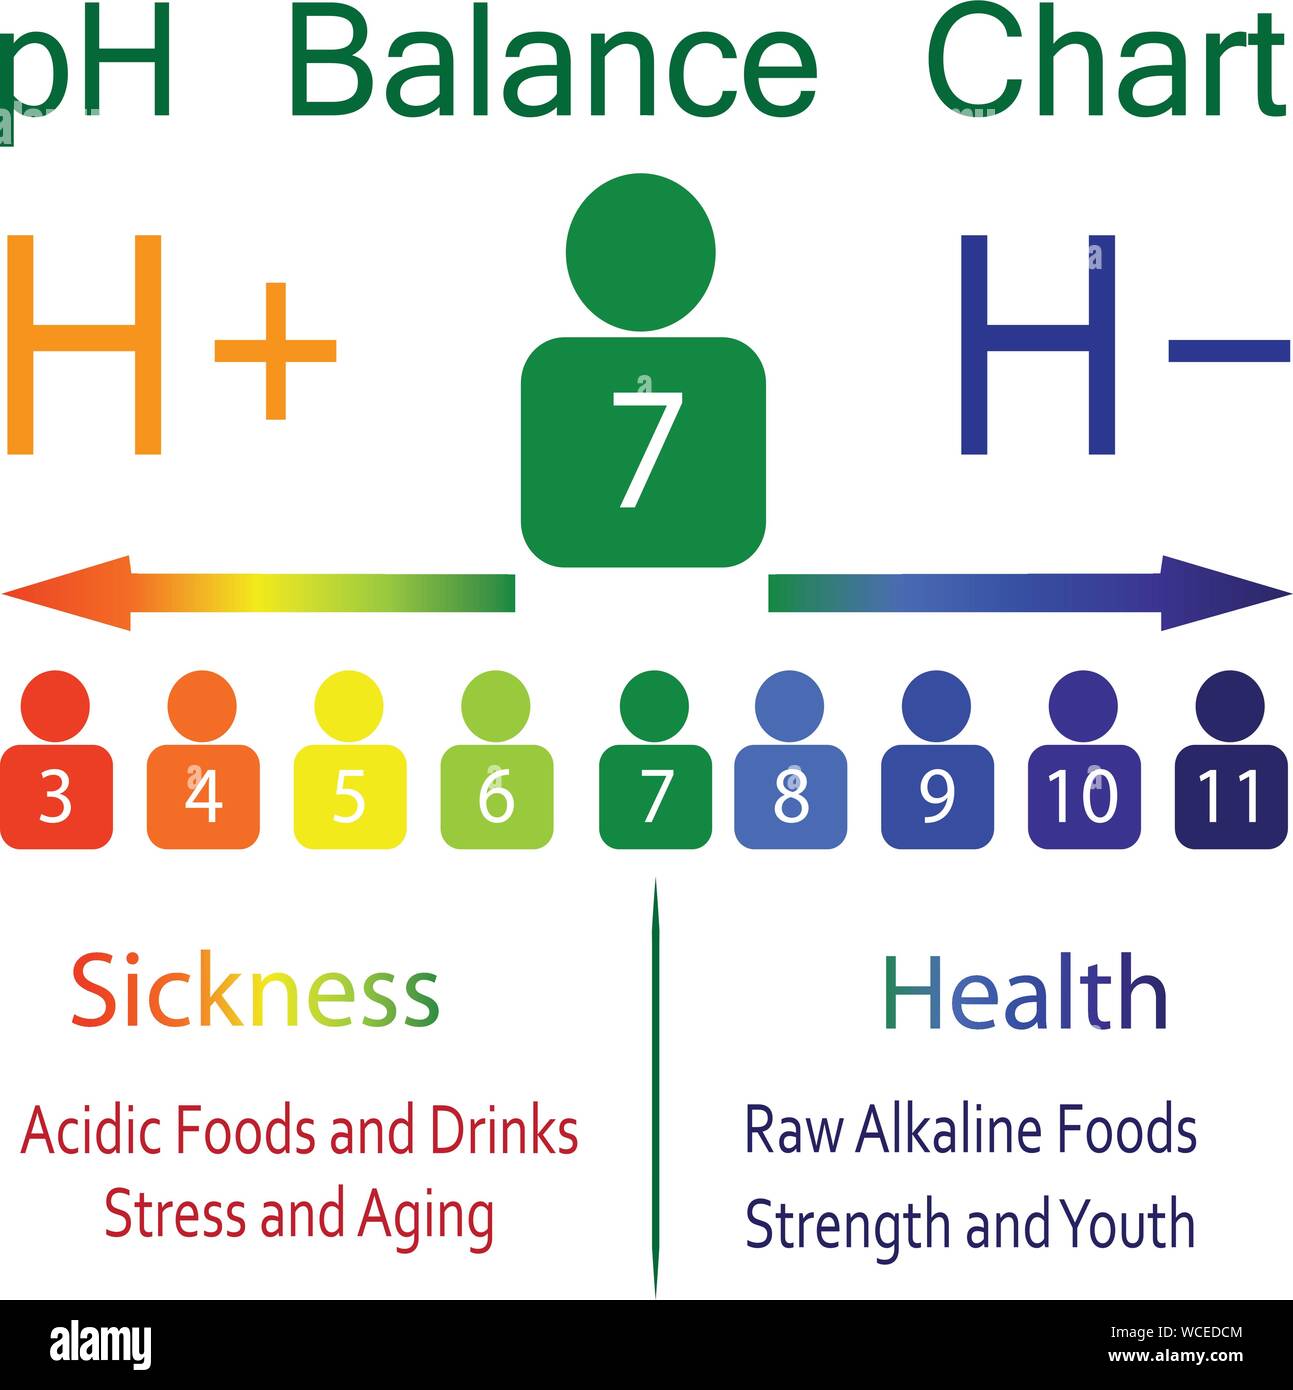 Body Ph Level Chart